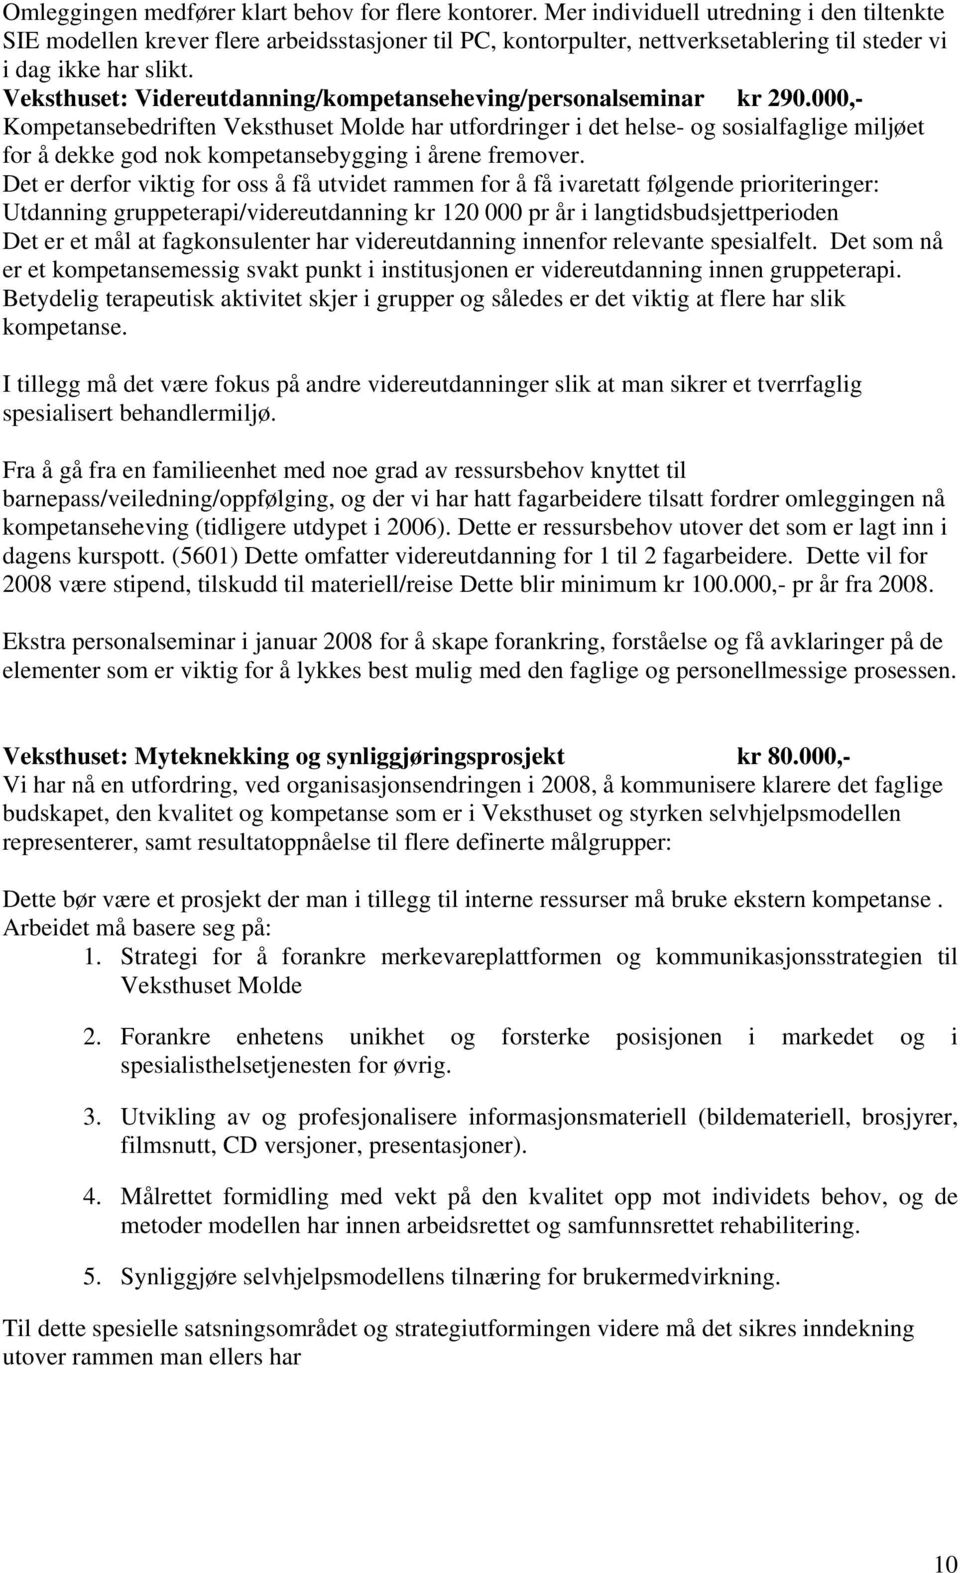 Veksthuset: Videreutdanning/kompetanseheving/personalseminar kr 290.